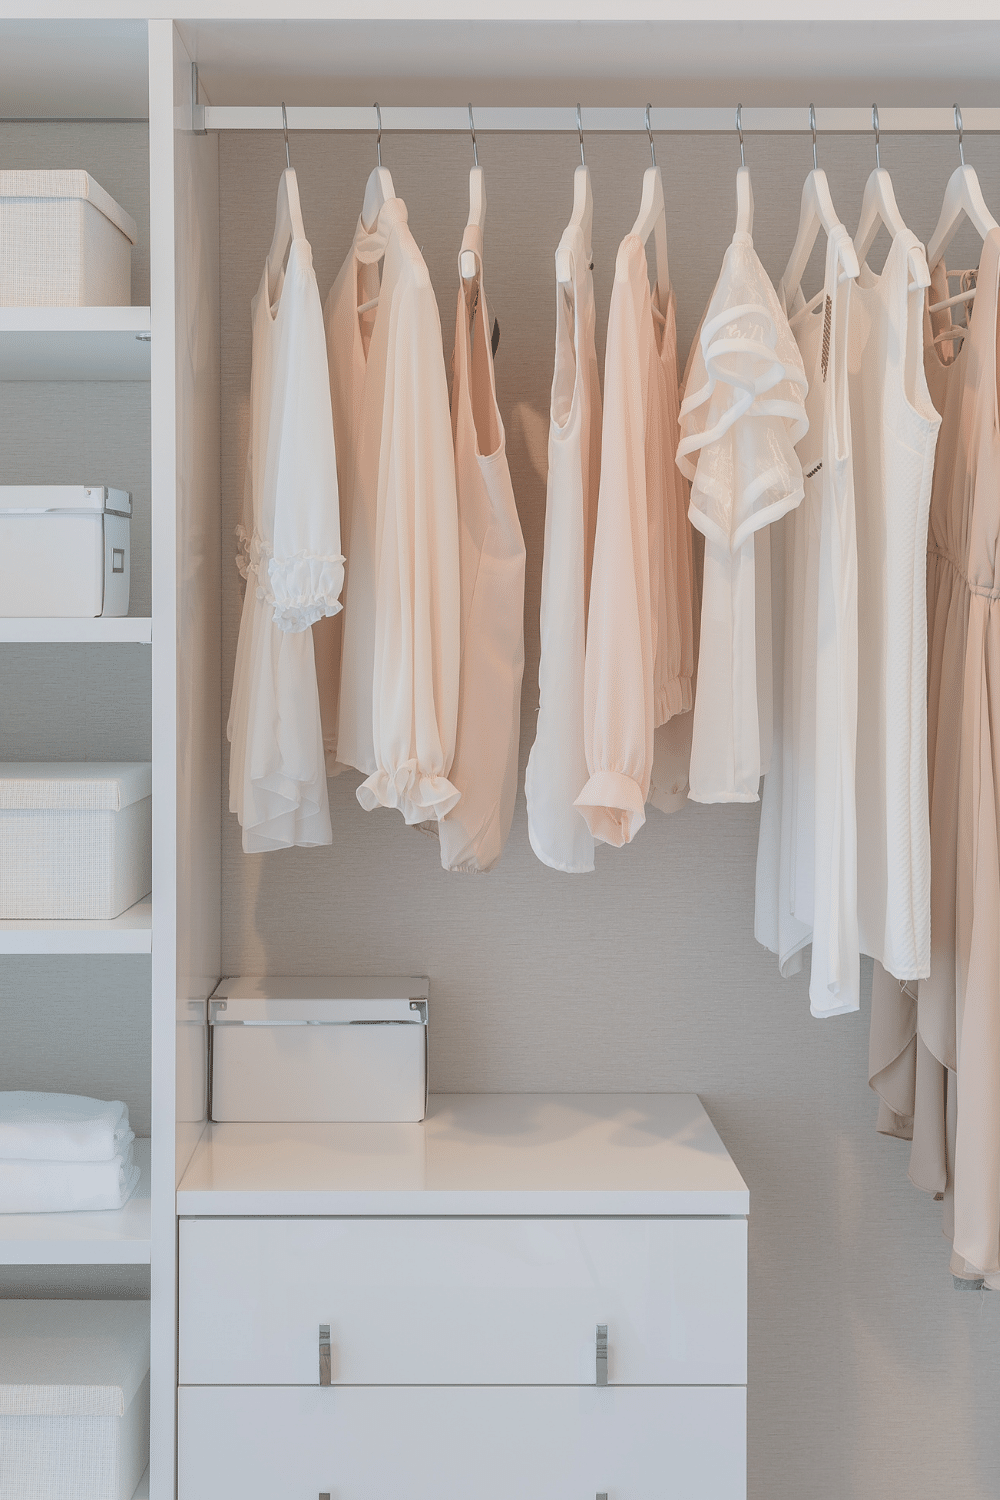 organizing clothing in walk-in closet